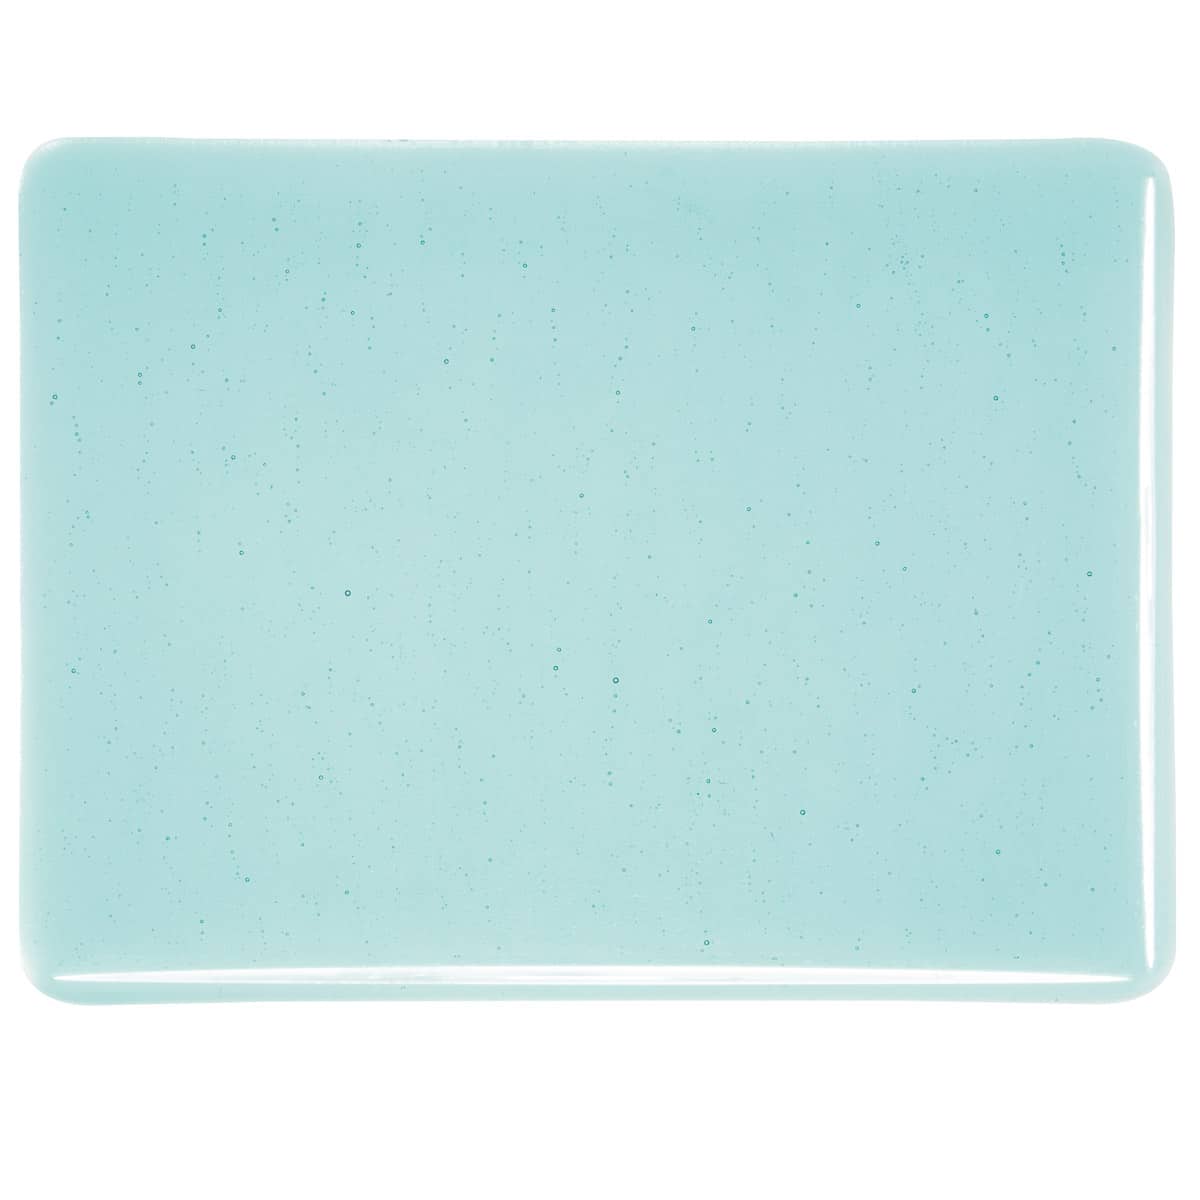 001408 Light Aquamarine Blue transparent sheet glass swatch